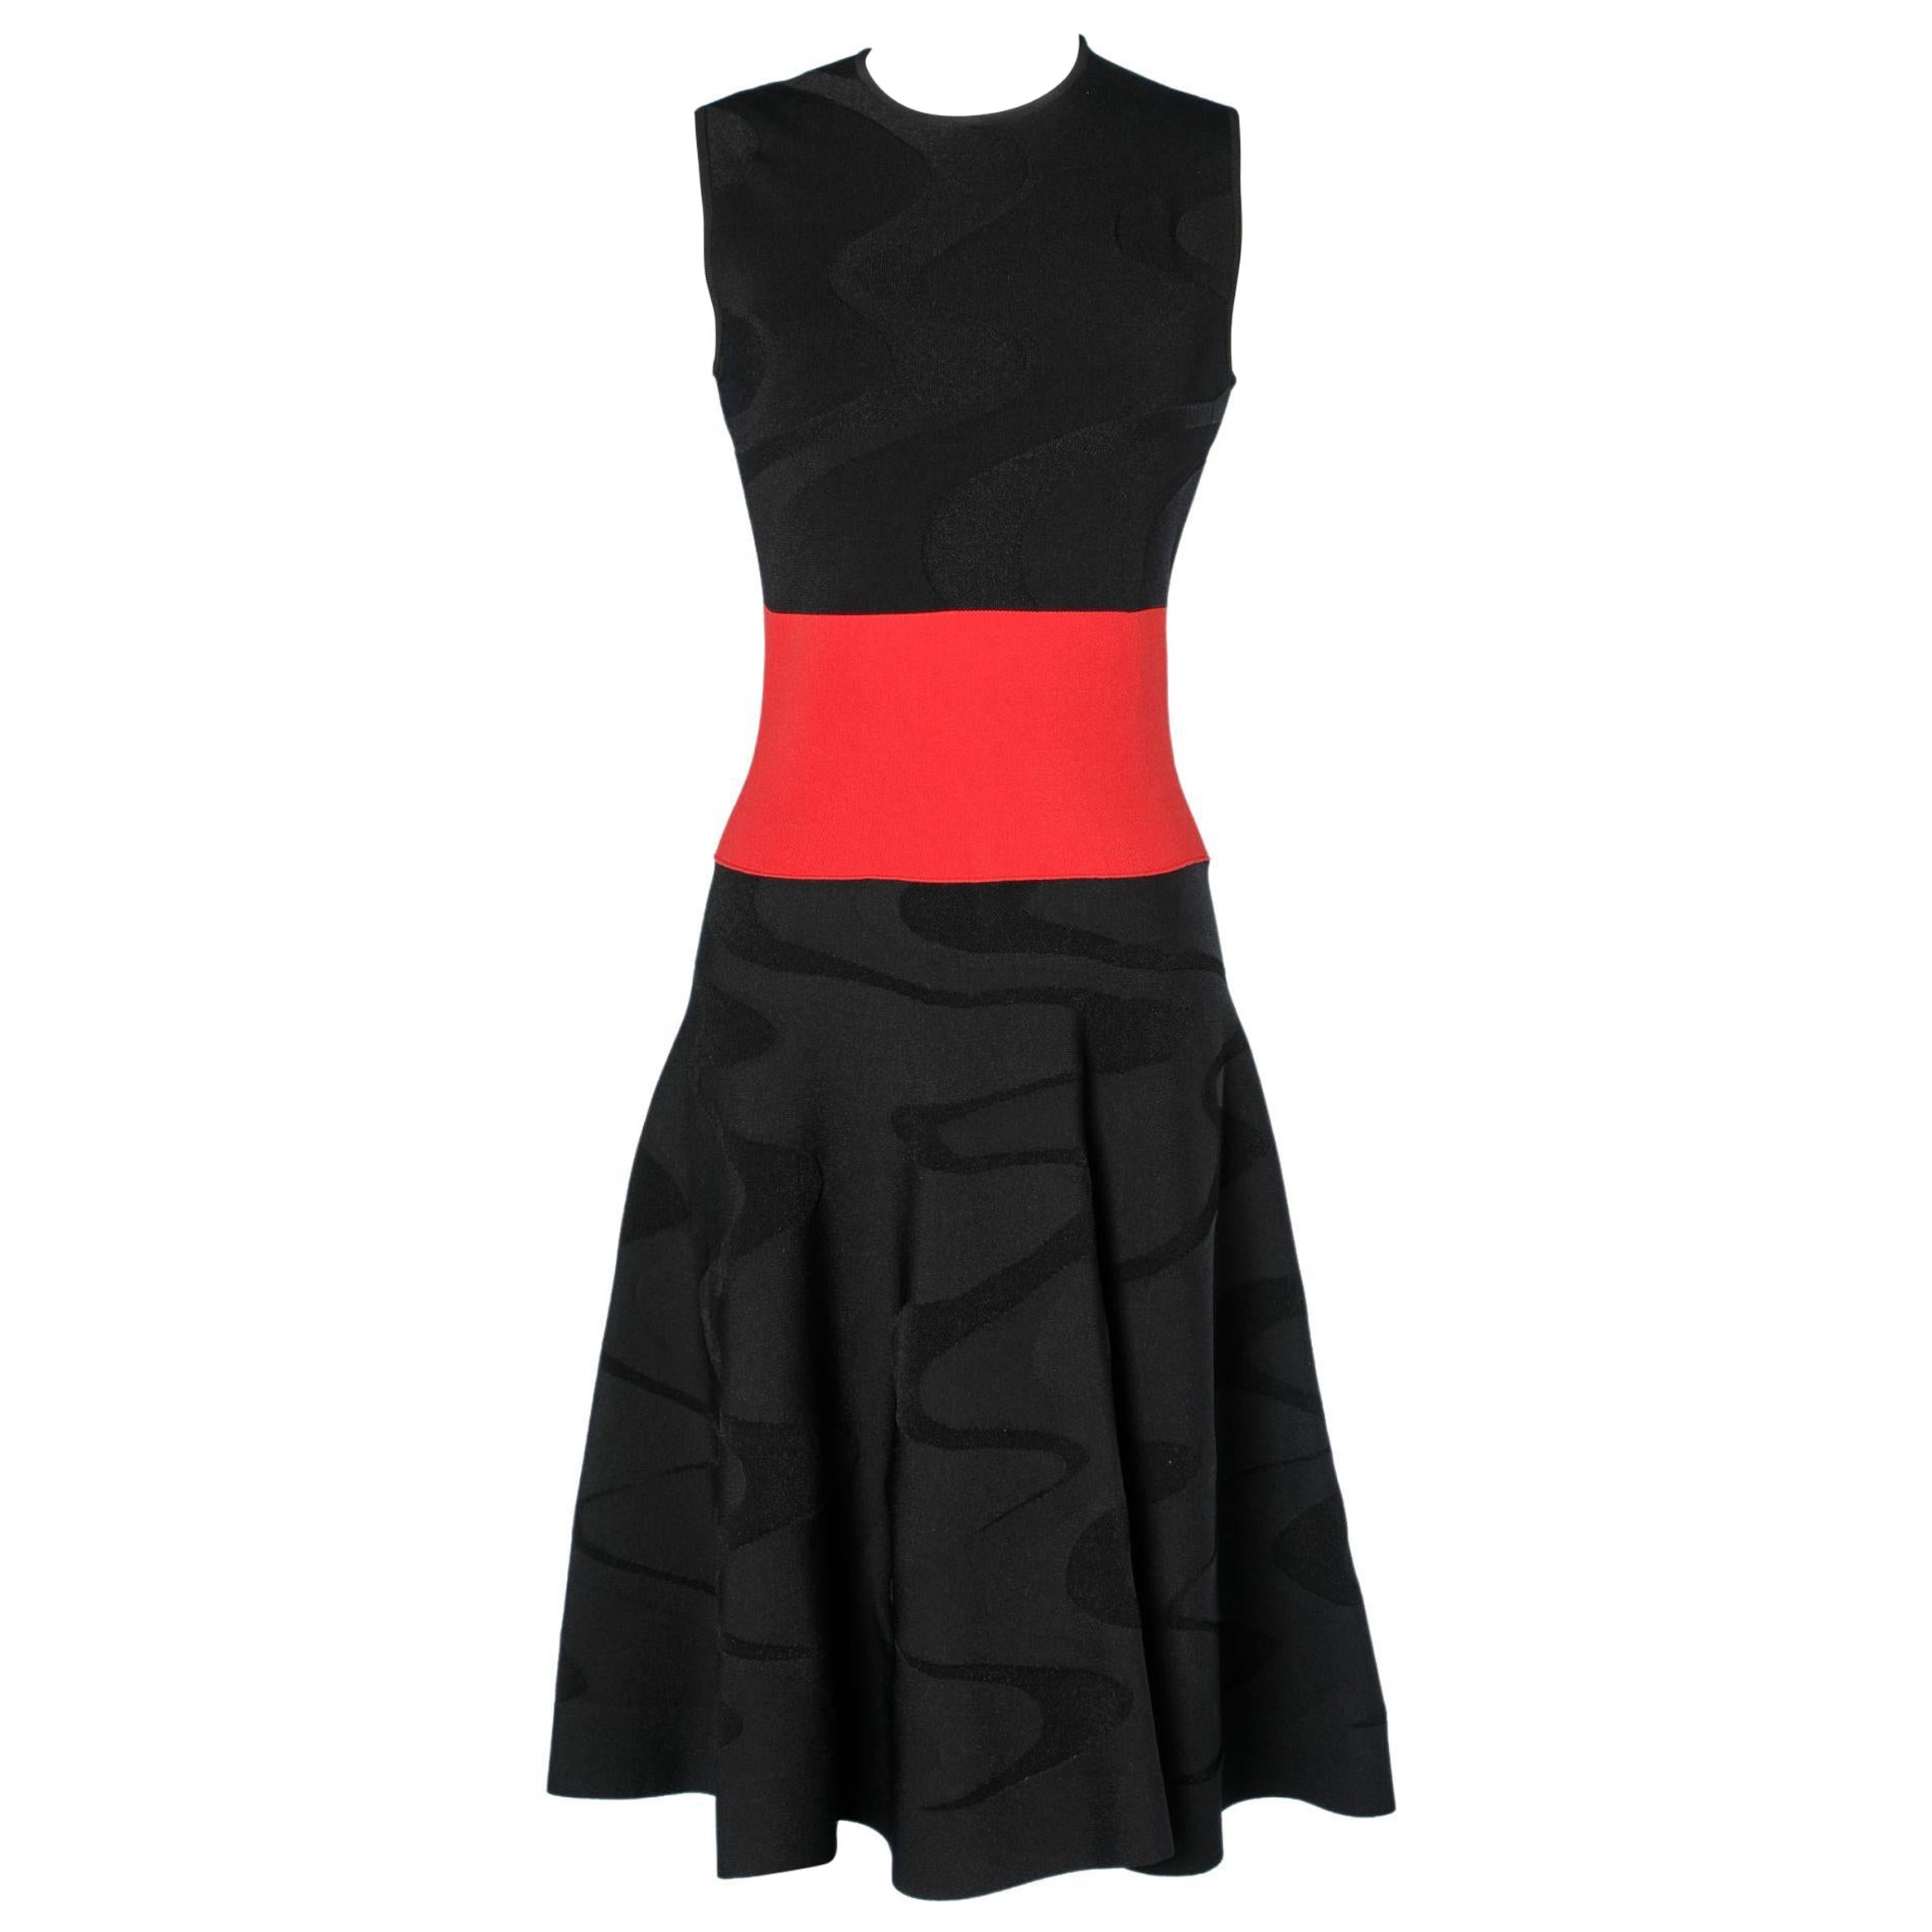 Sleeveless black and red knit dress Alexander McQueen 